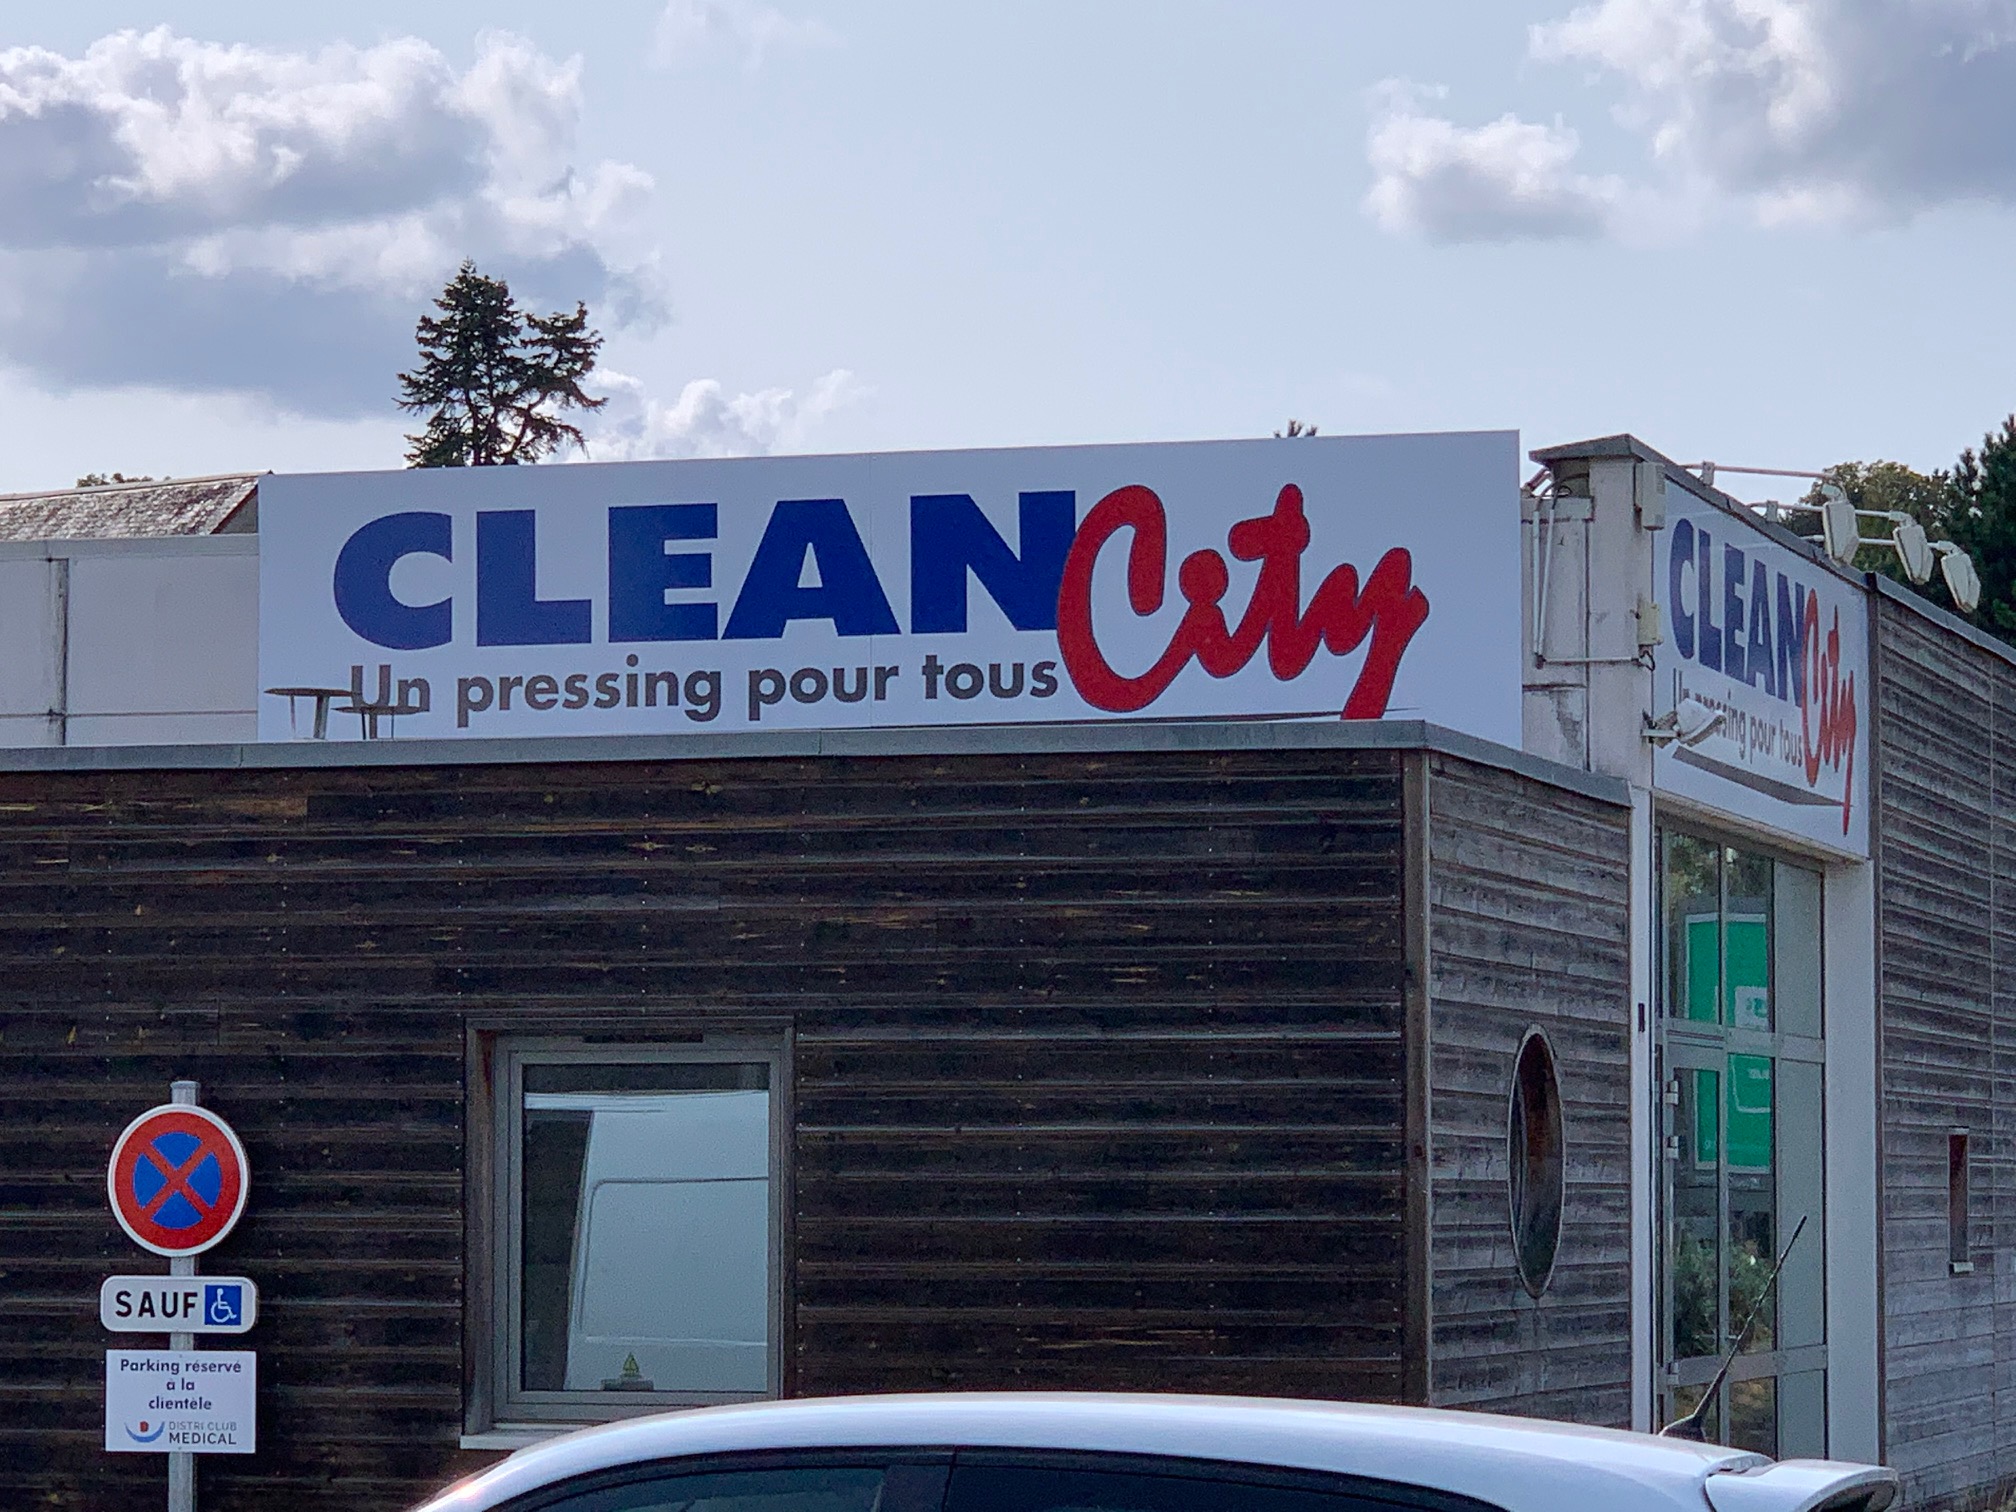 Clean city